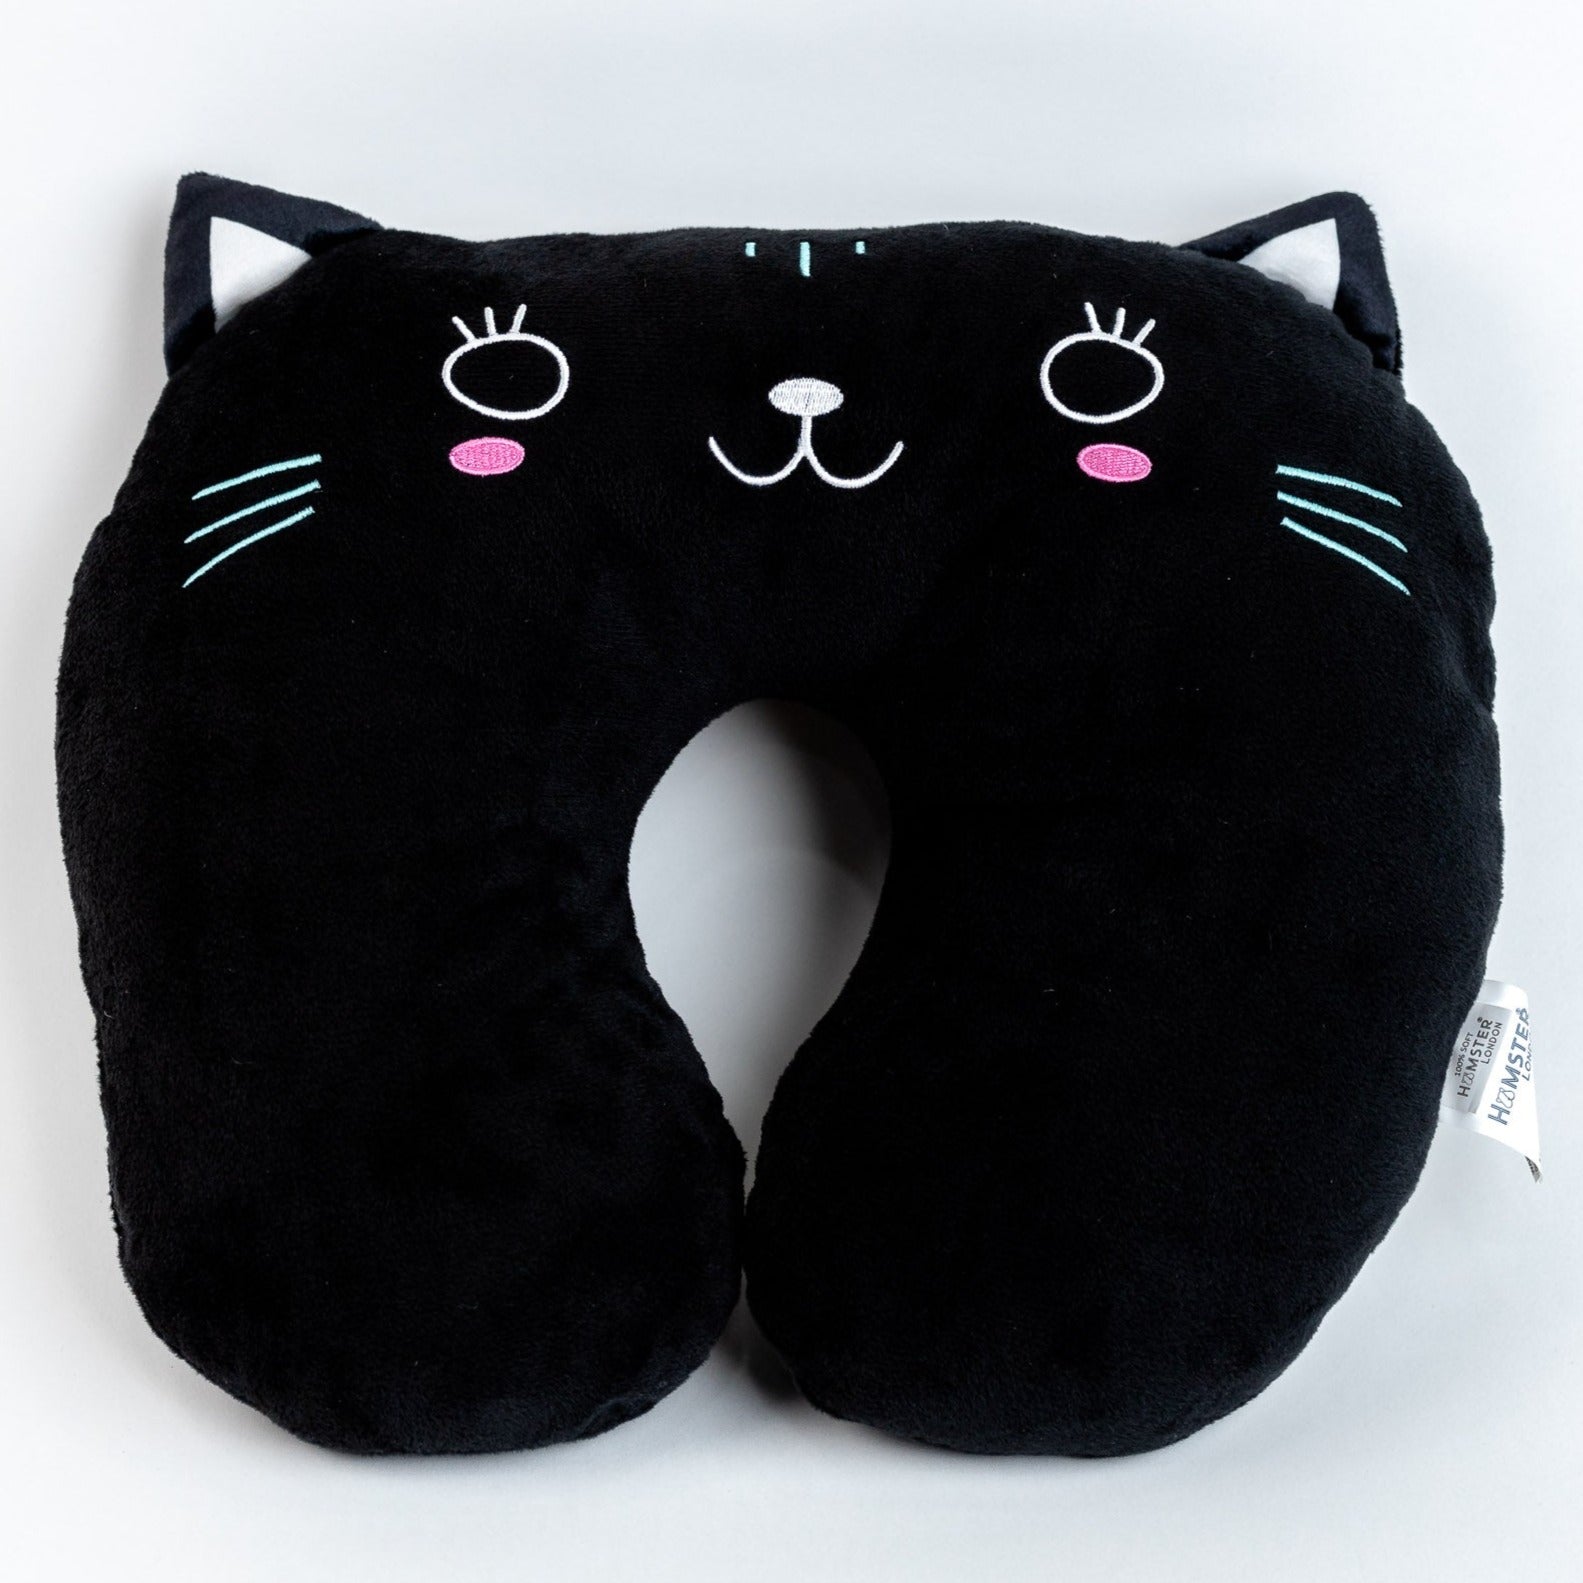 HL Travel Pillow Black Cat